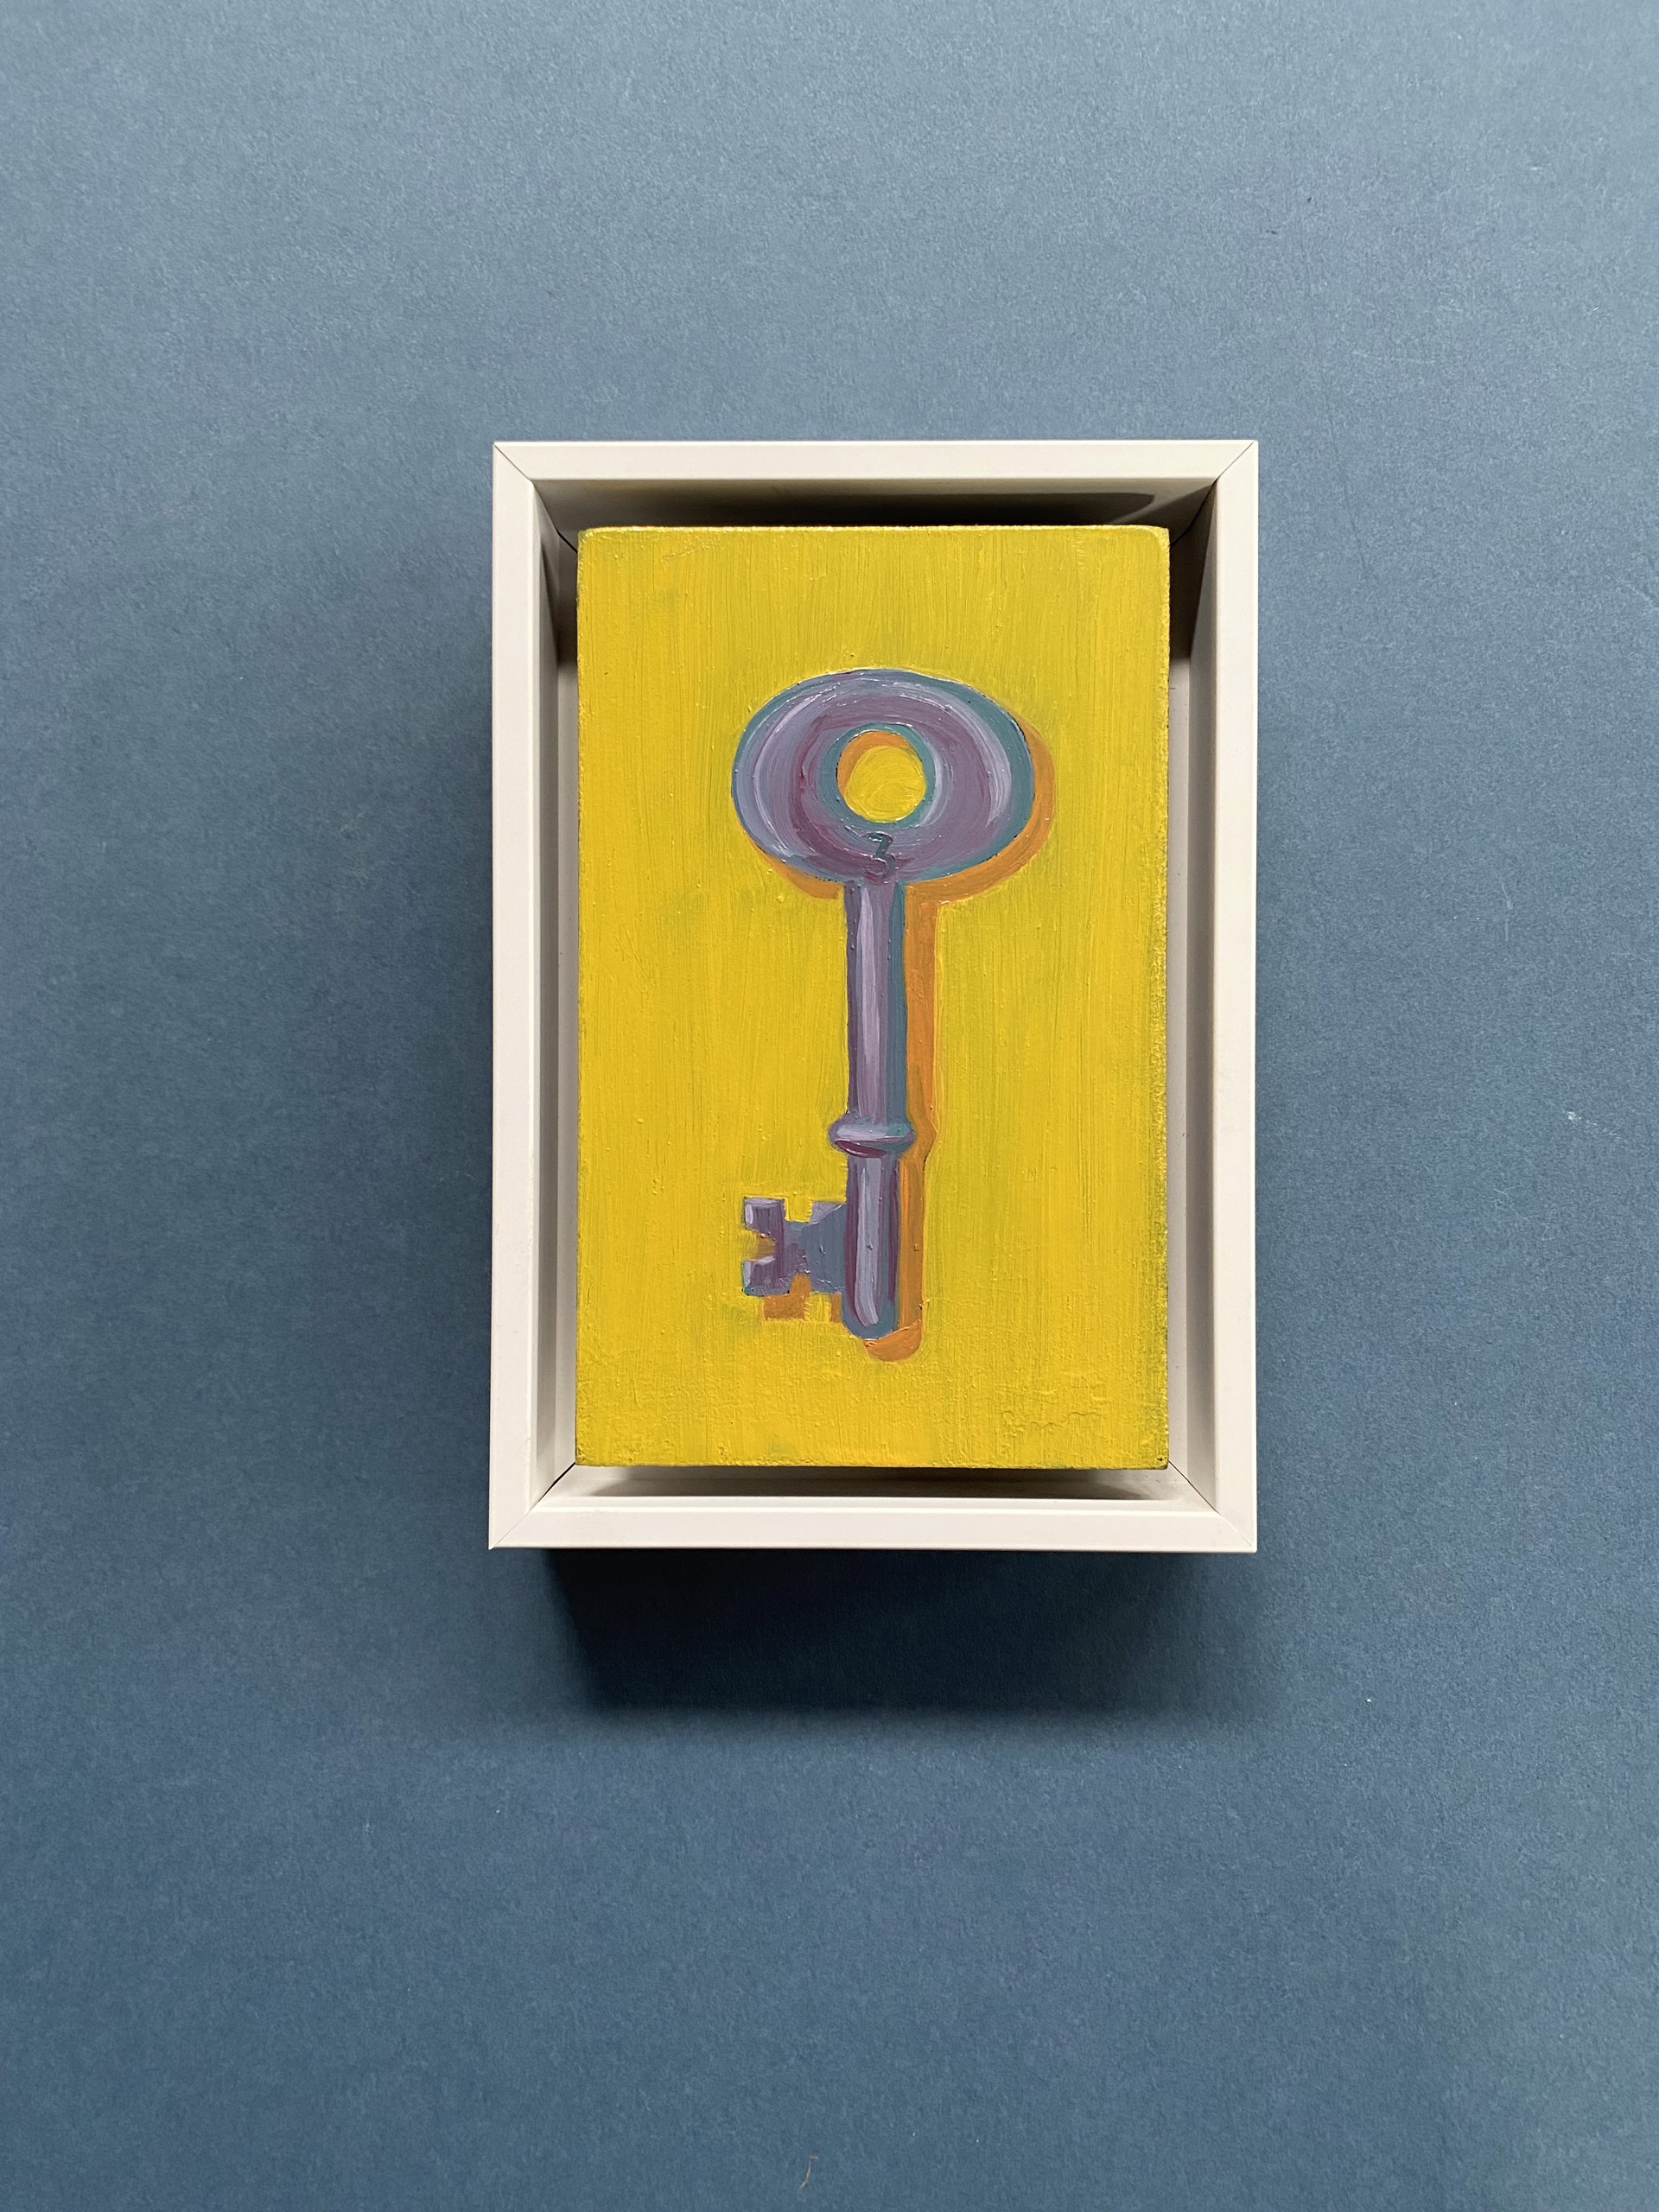 Key No. 11 by Stephen Wells